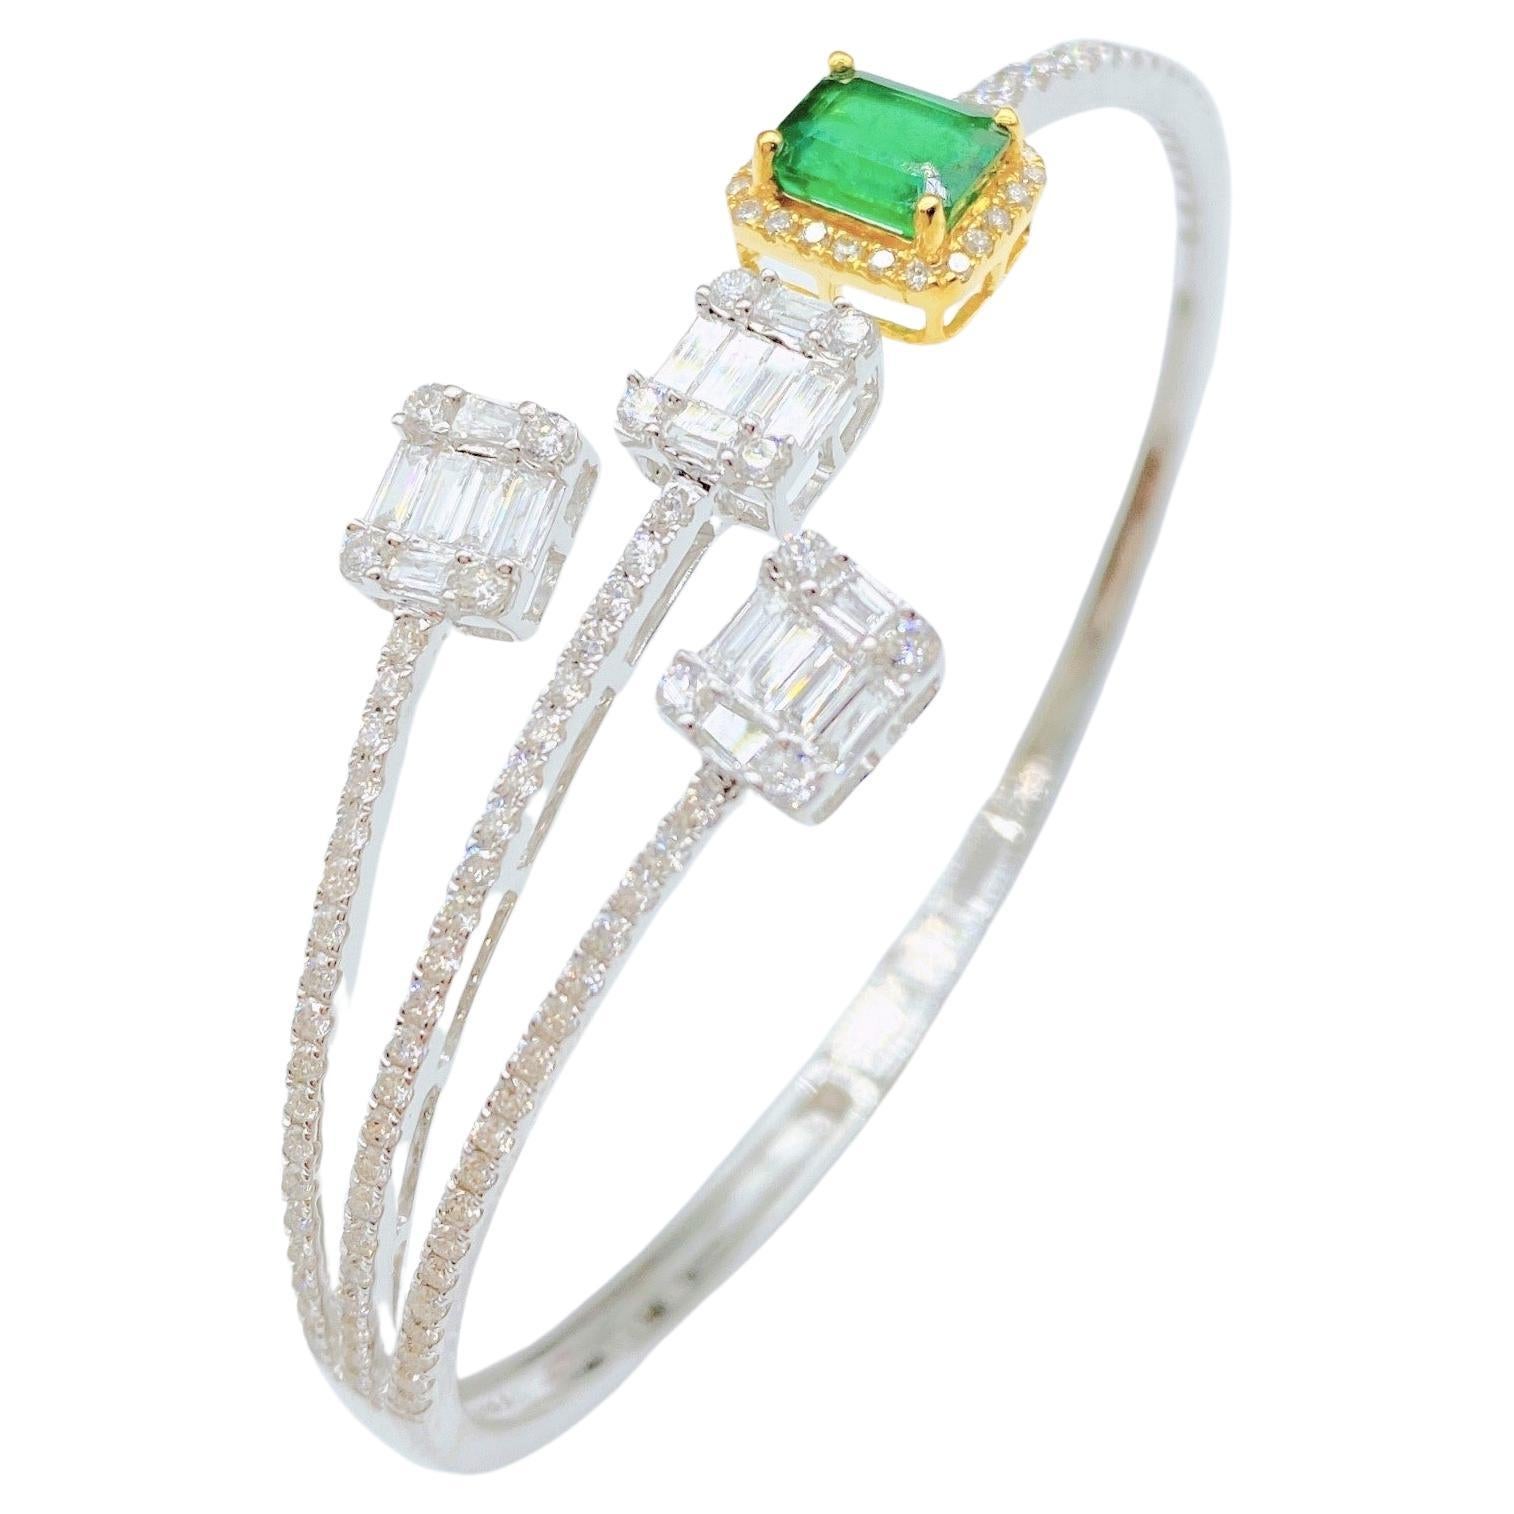 NWT $16,399 18KT Gold Glitzernder Fancy Grüner Smaragd Diamant-Armreif